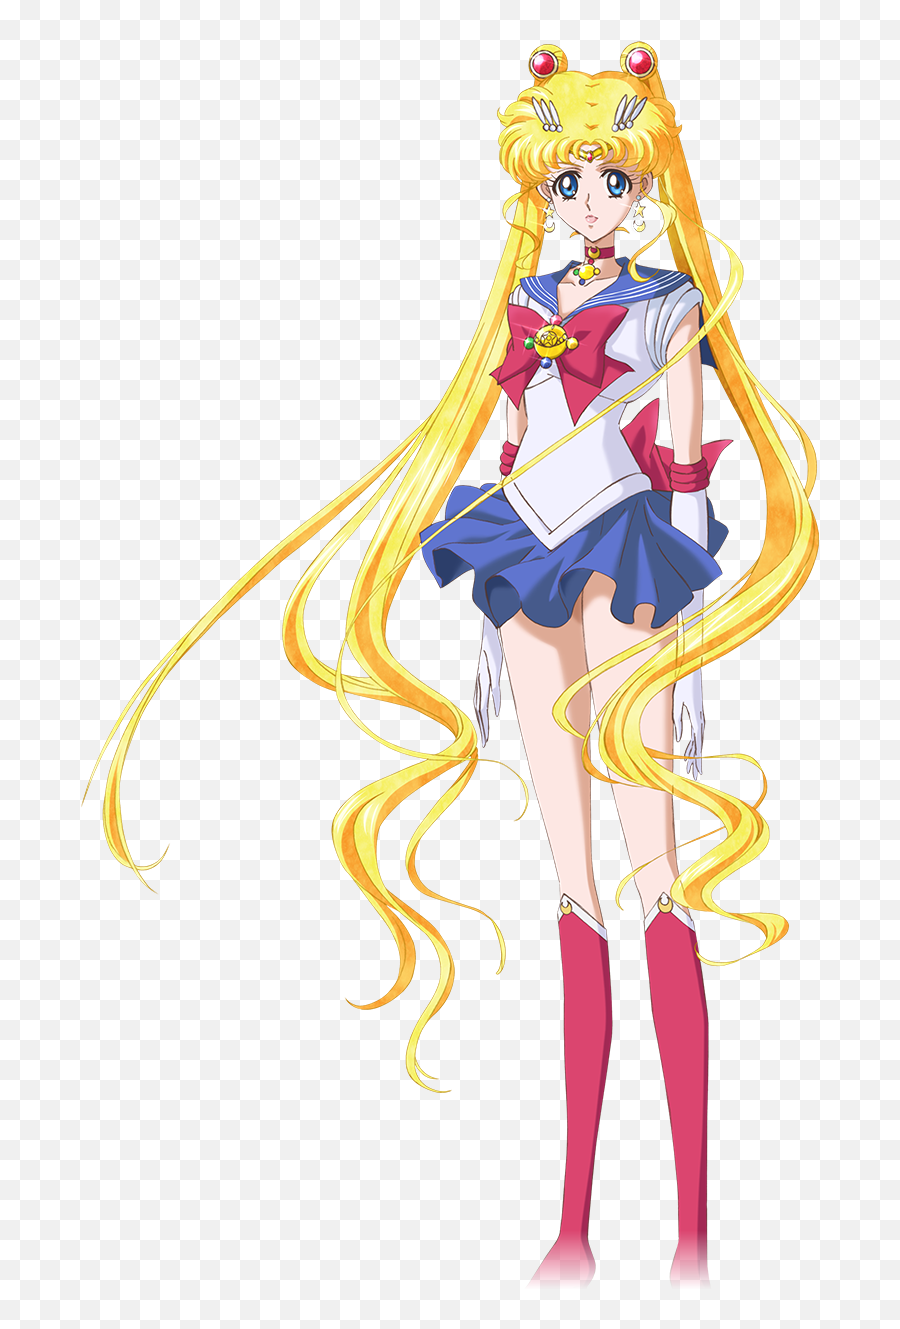 Sailor Moon Png - Sailor Moon Crystal Sailor Moon,Sailor Moon Png